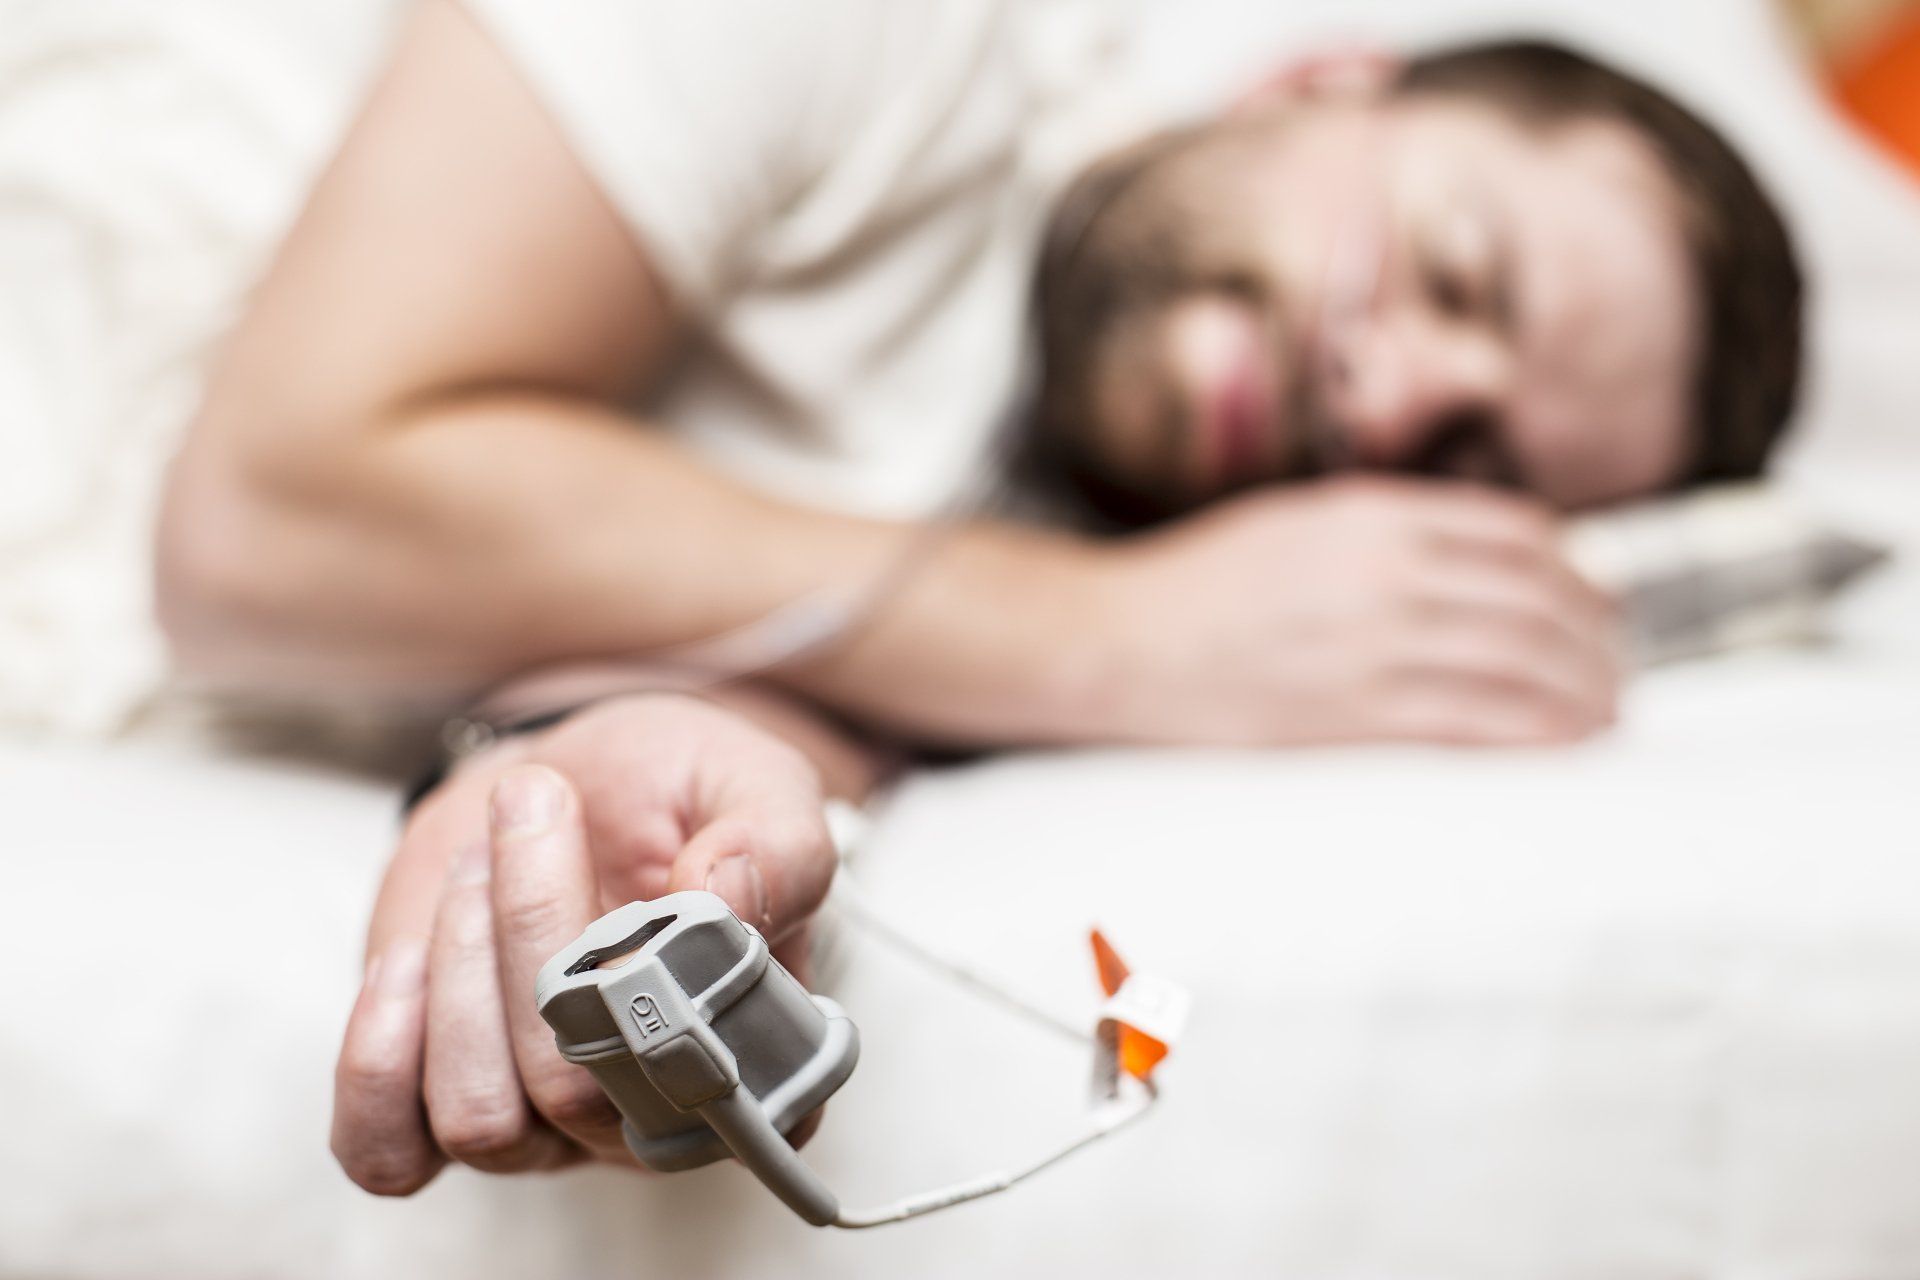 Sleep Apnea Treatments